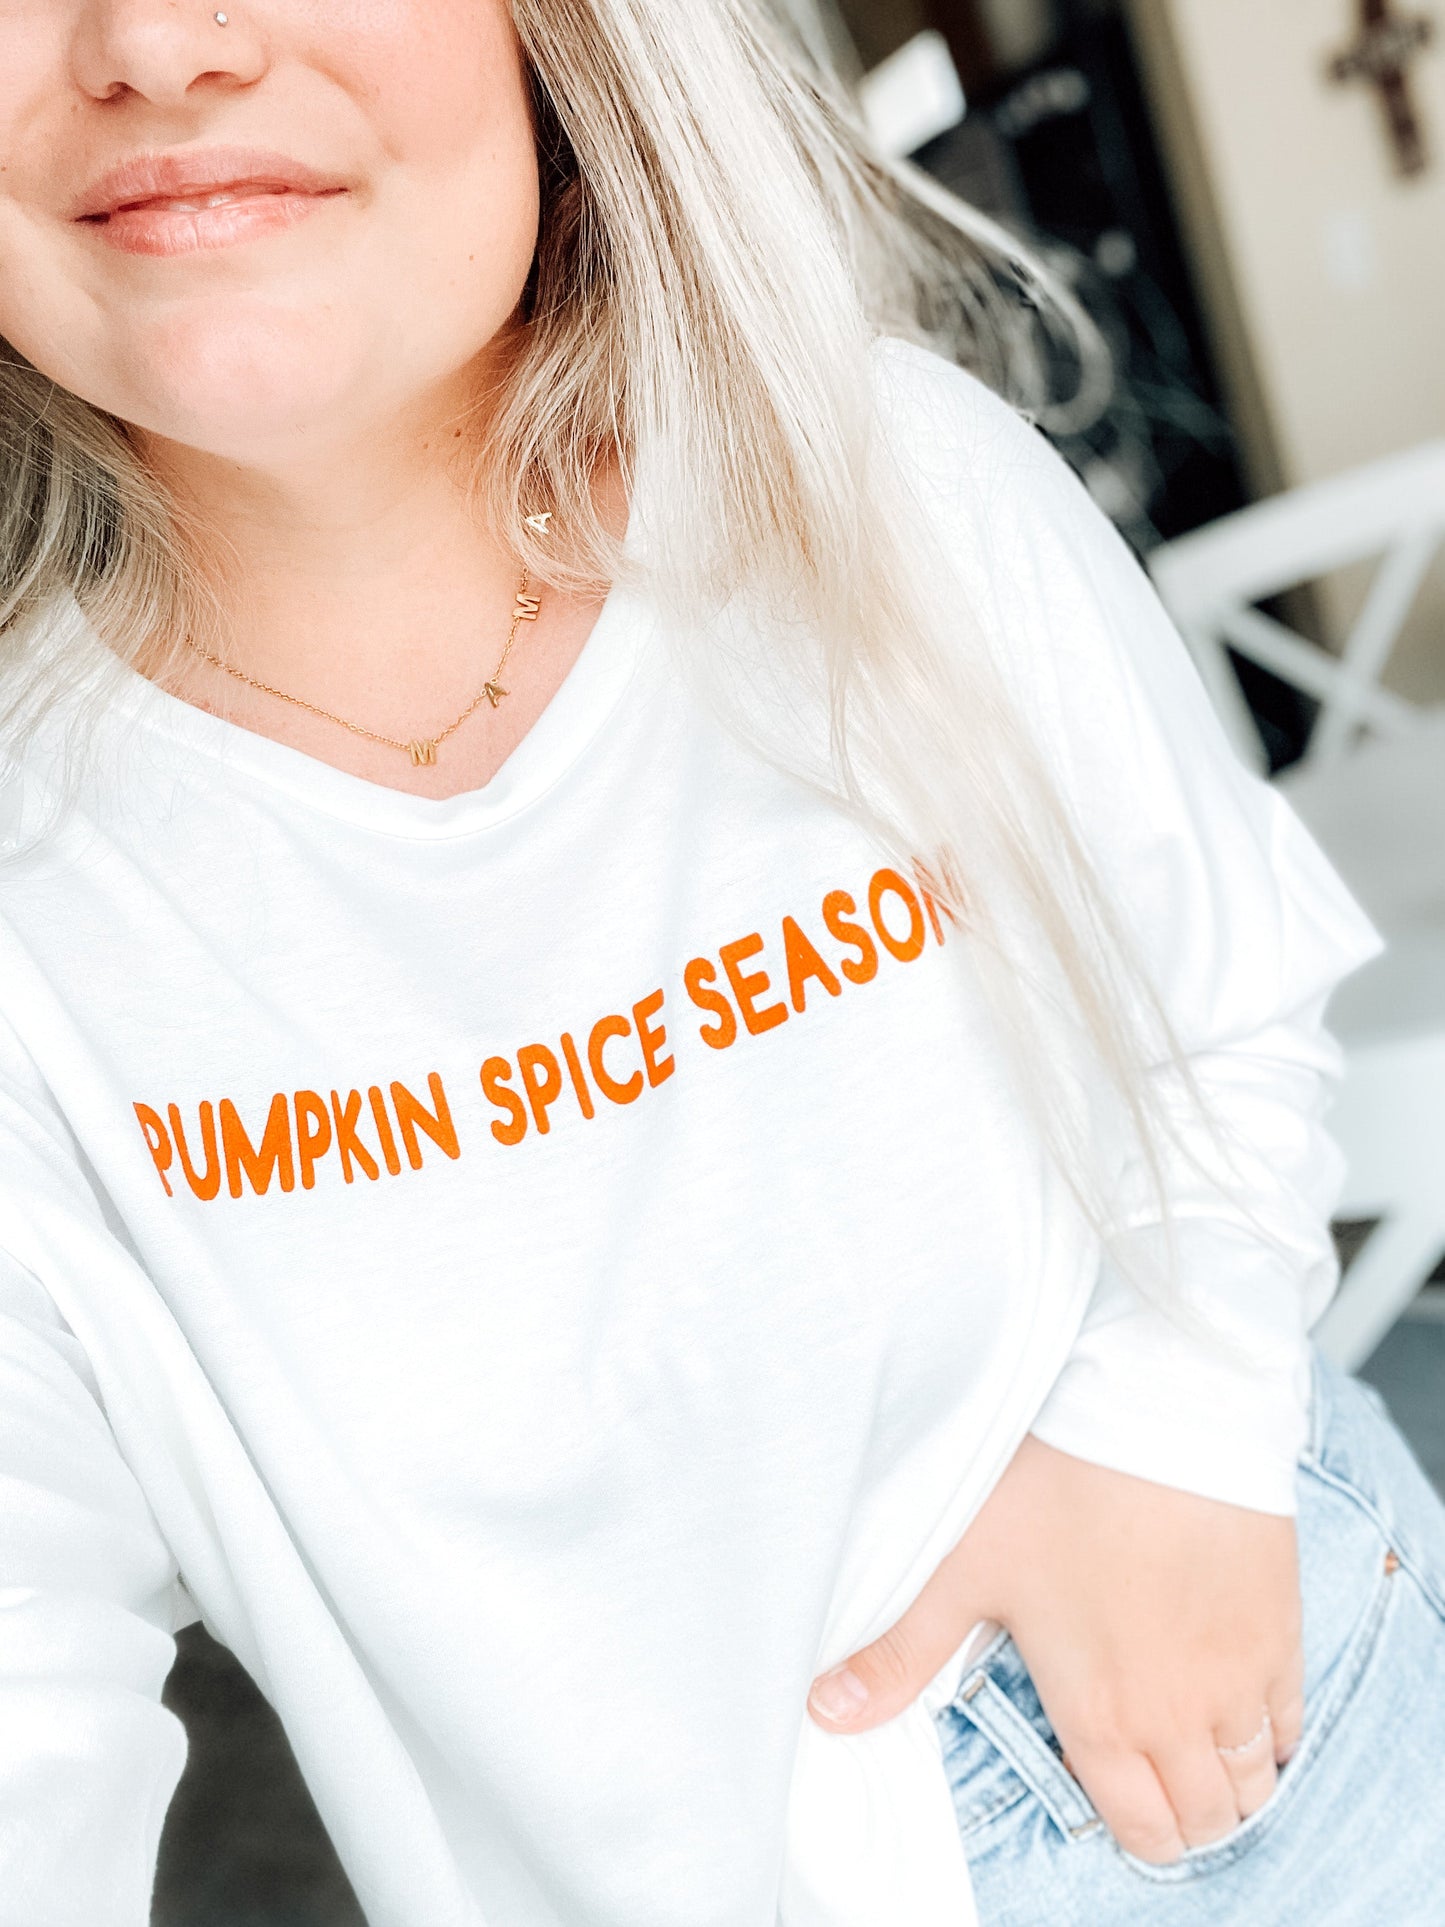 Pumpkin Spice Season 🎃 Top